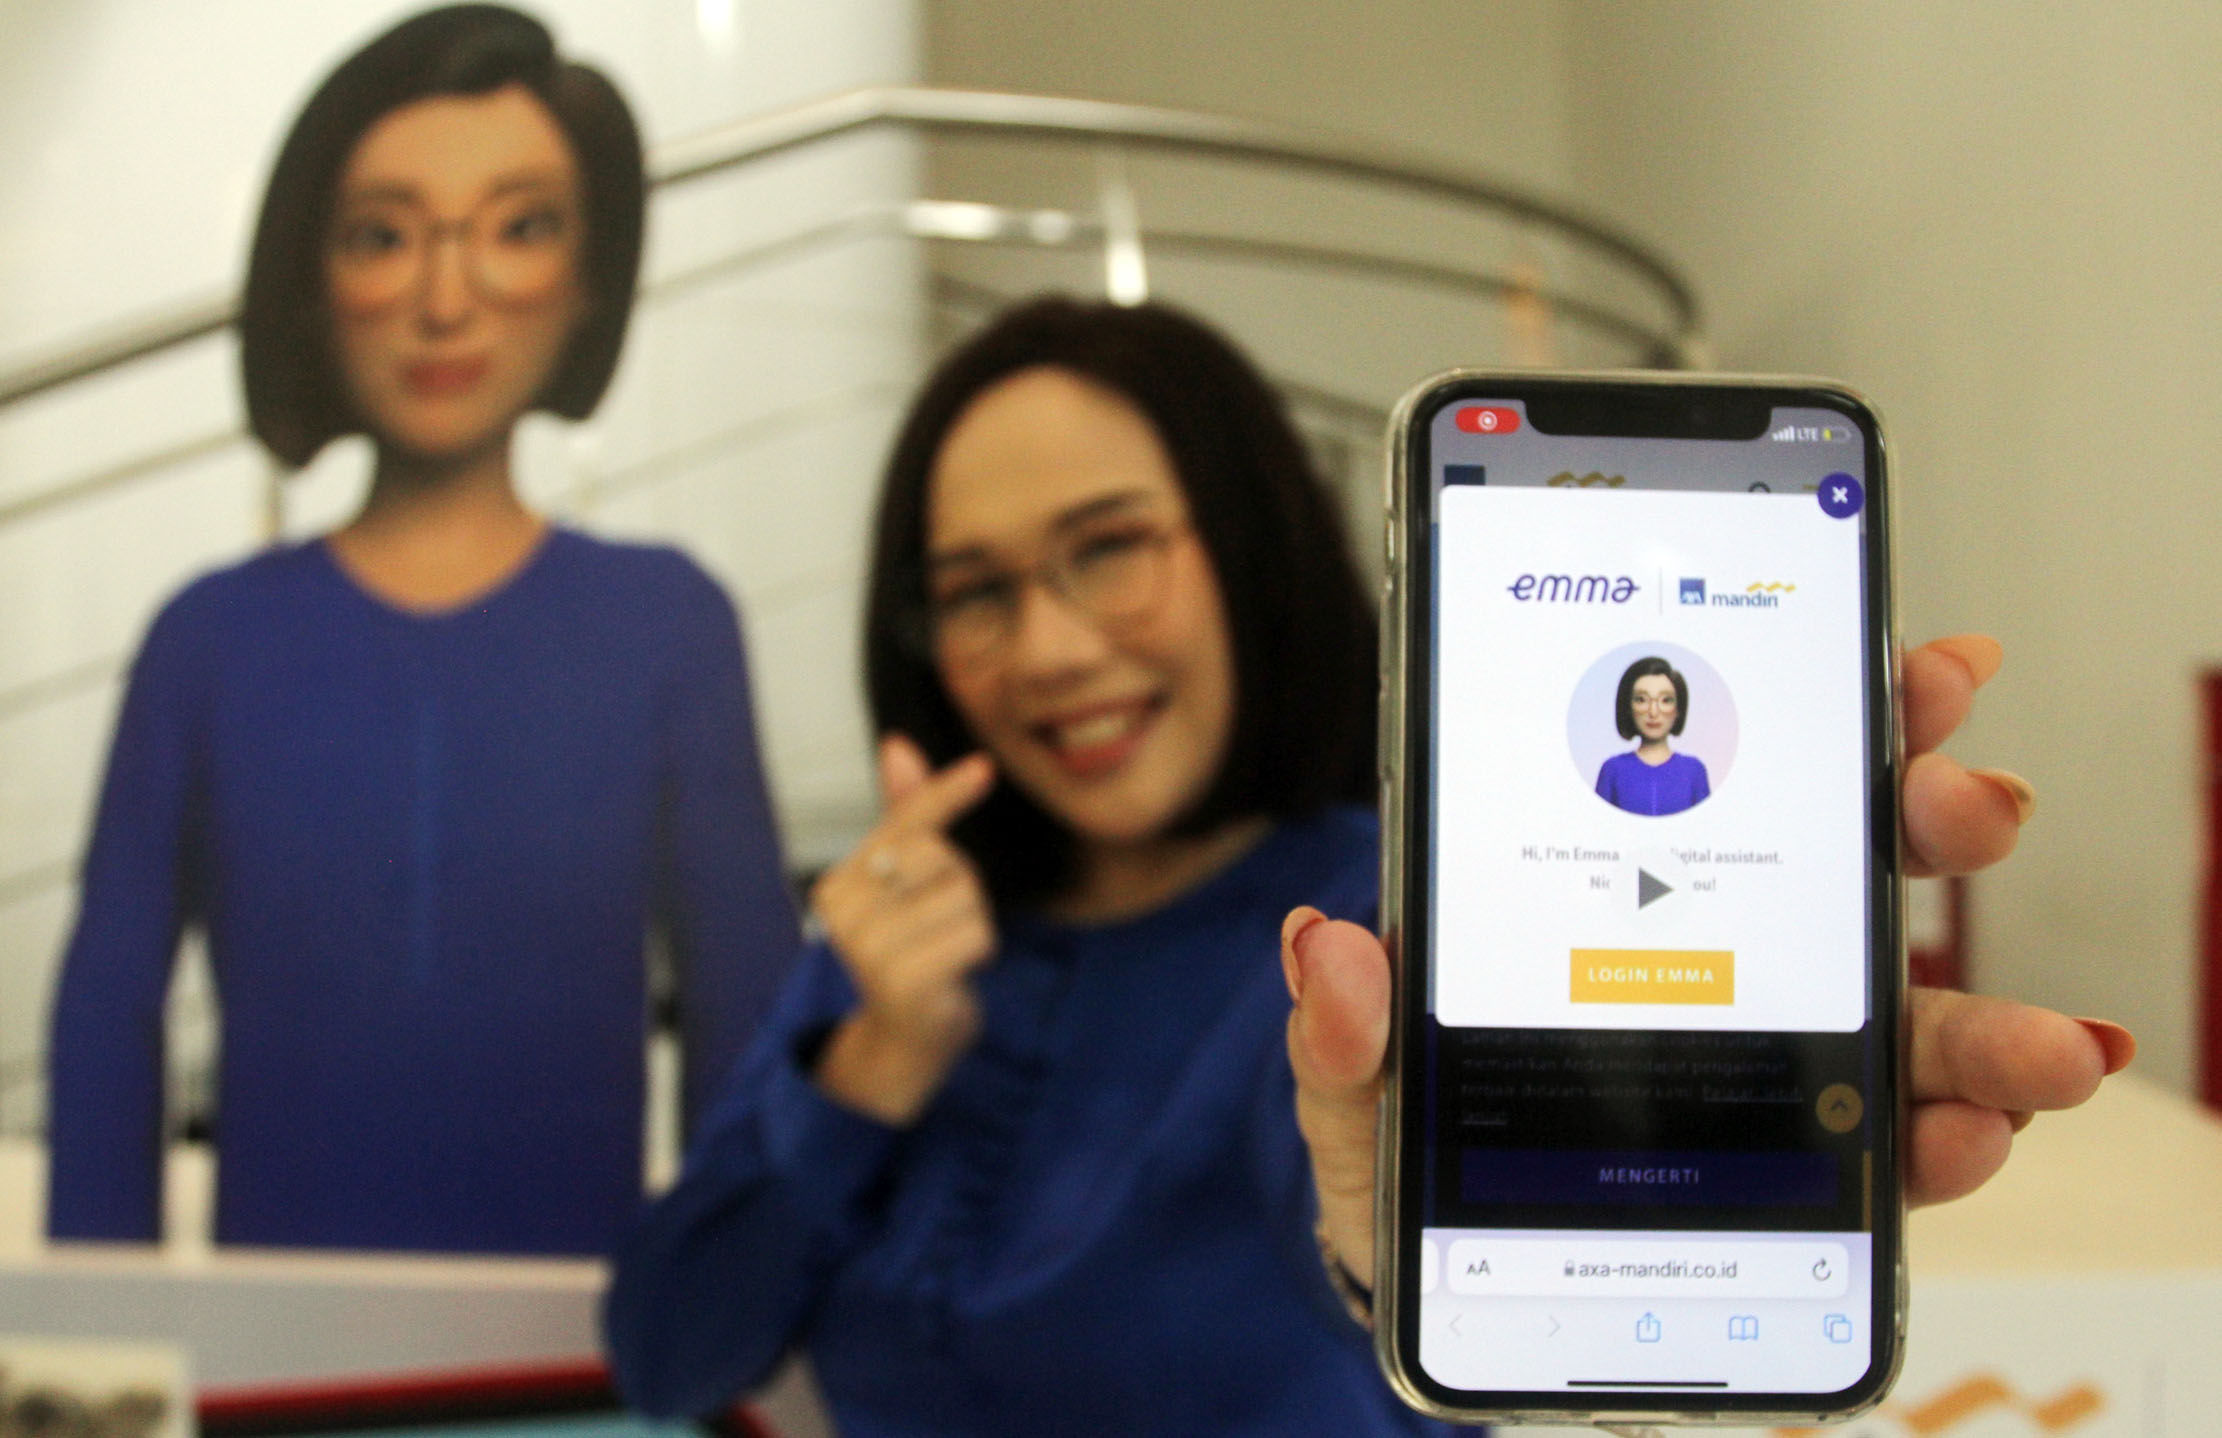 Cherly Juno, Public Figure yang juga nasabah AXA menunjukkan aplikasi di ponsel usai acara peluncuran Emma, layanan asuransi dan kesehatan digital menyeluruh satu pintu dari AXA Mandiri dan AXA pada Kamis 25 November 2021. Foto : Panji Asmoro/TrenAsia